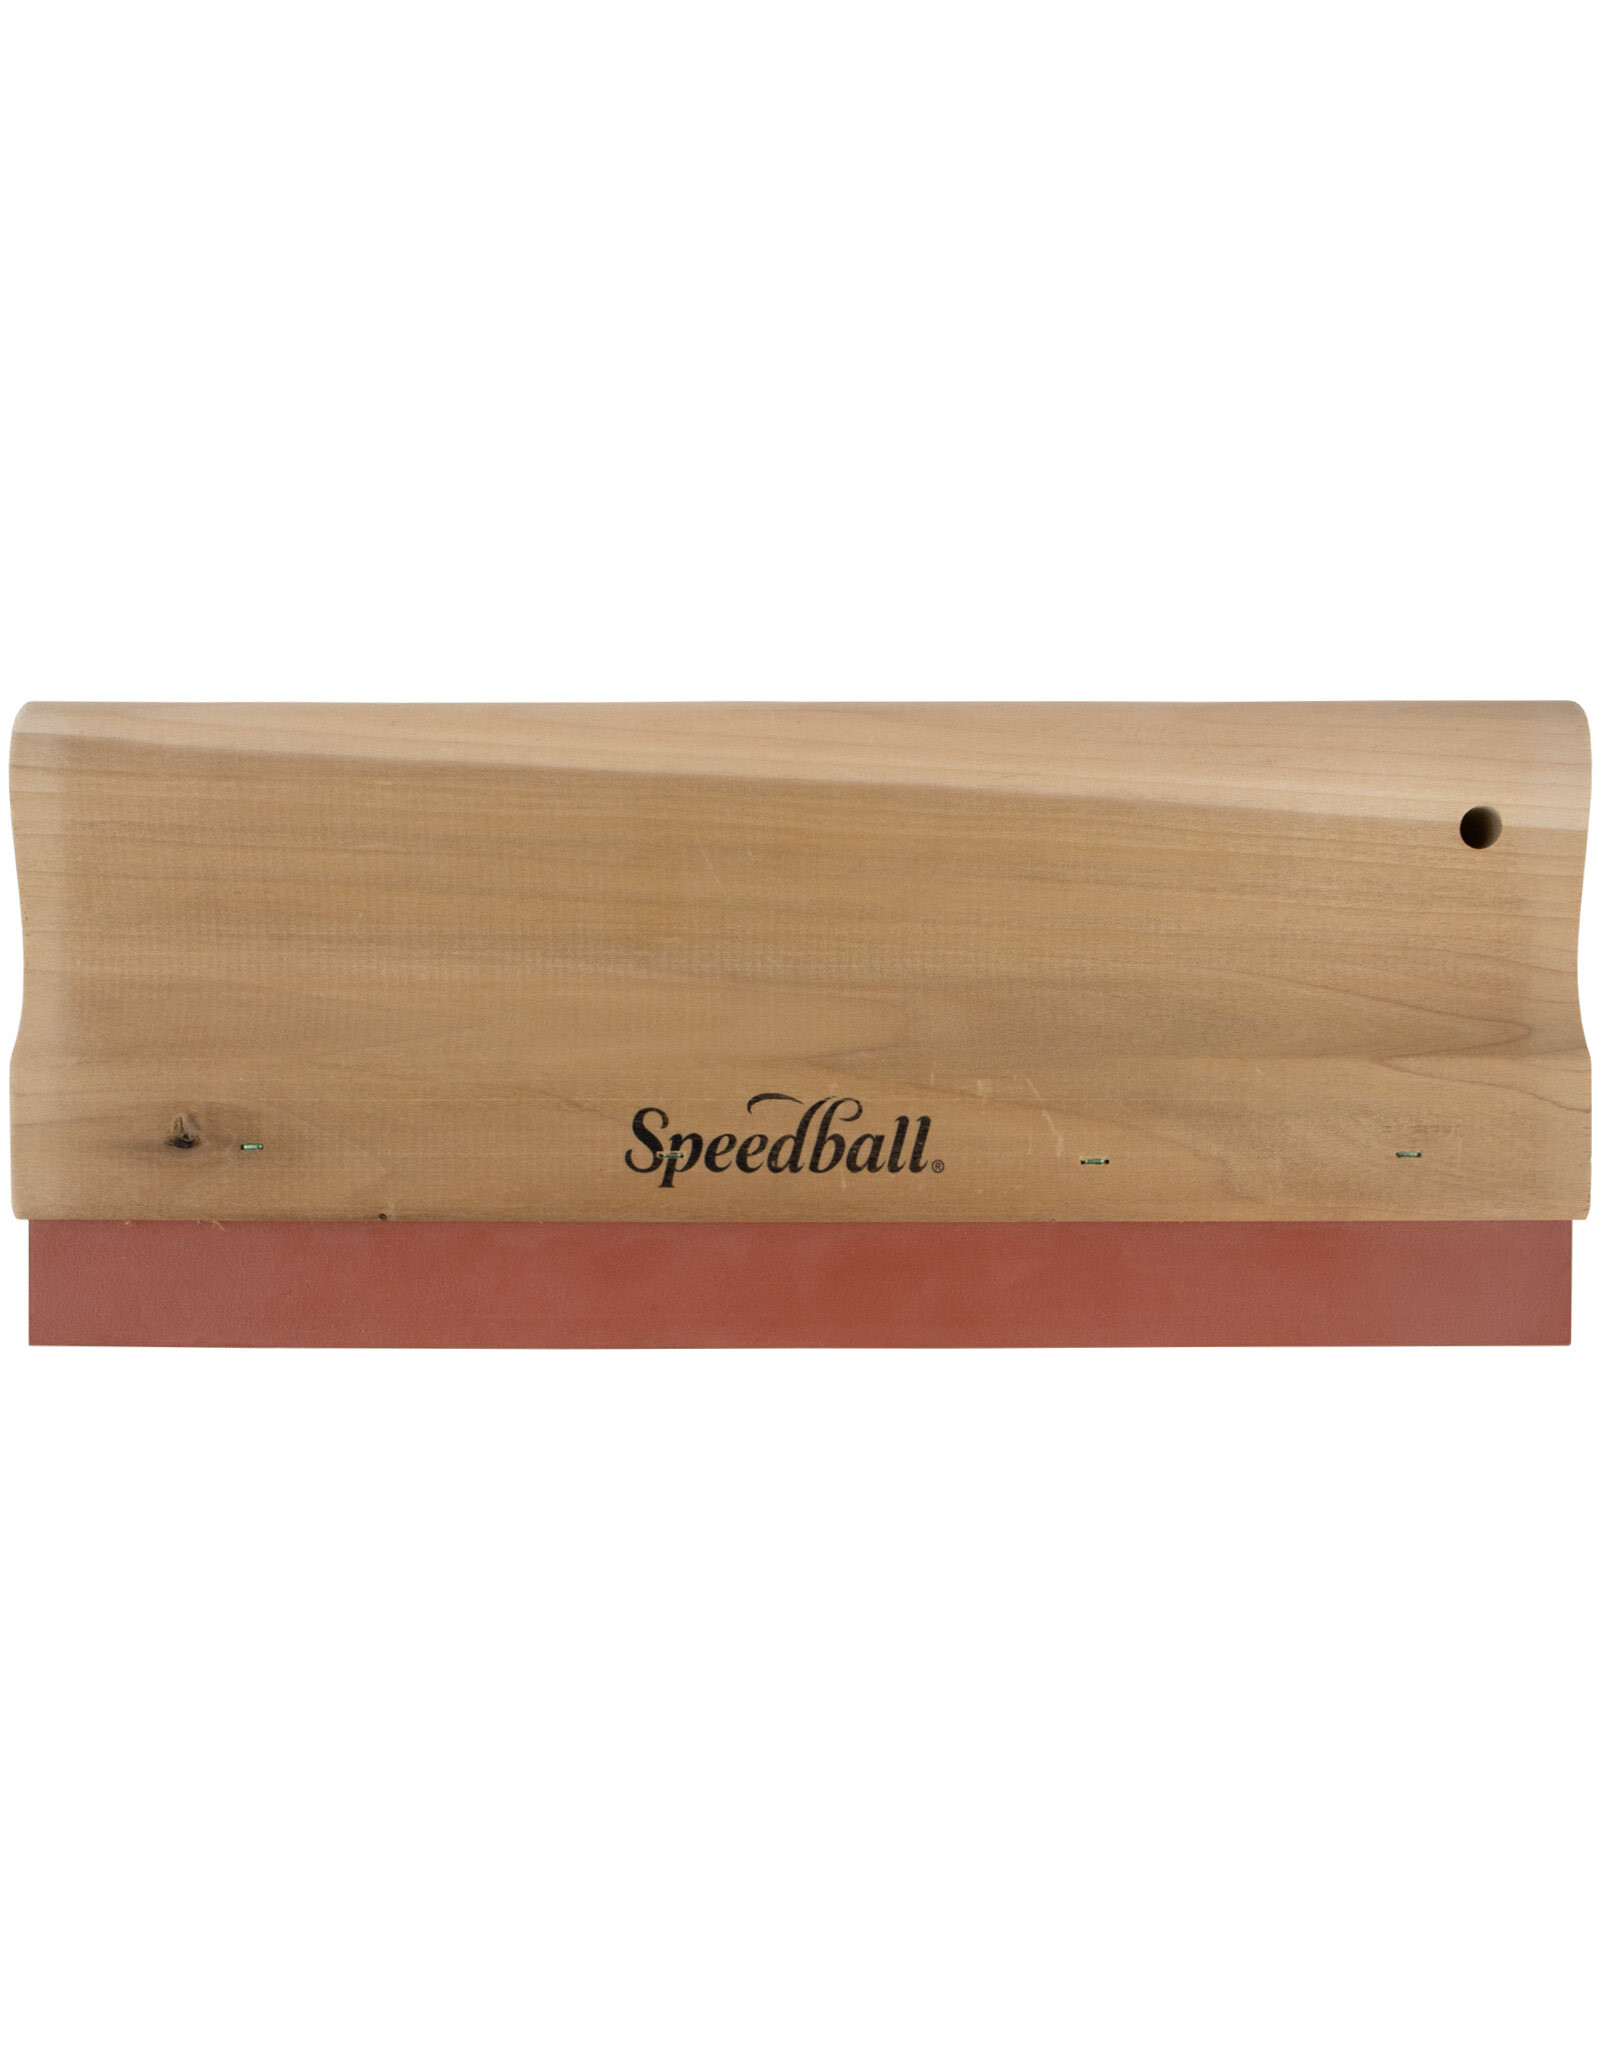 SPEEDBALL ART PRODUCTS Speedball 14" Graphic Squeegee, Neoprene, 70 Durometer